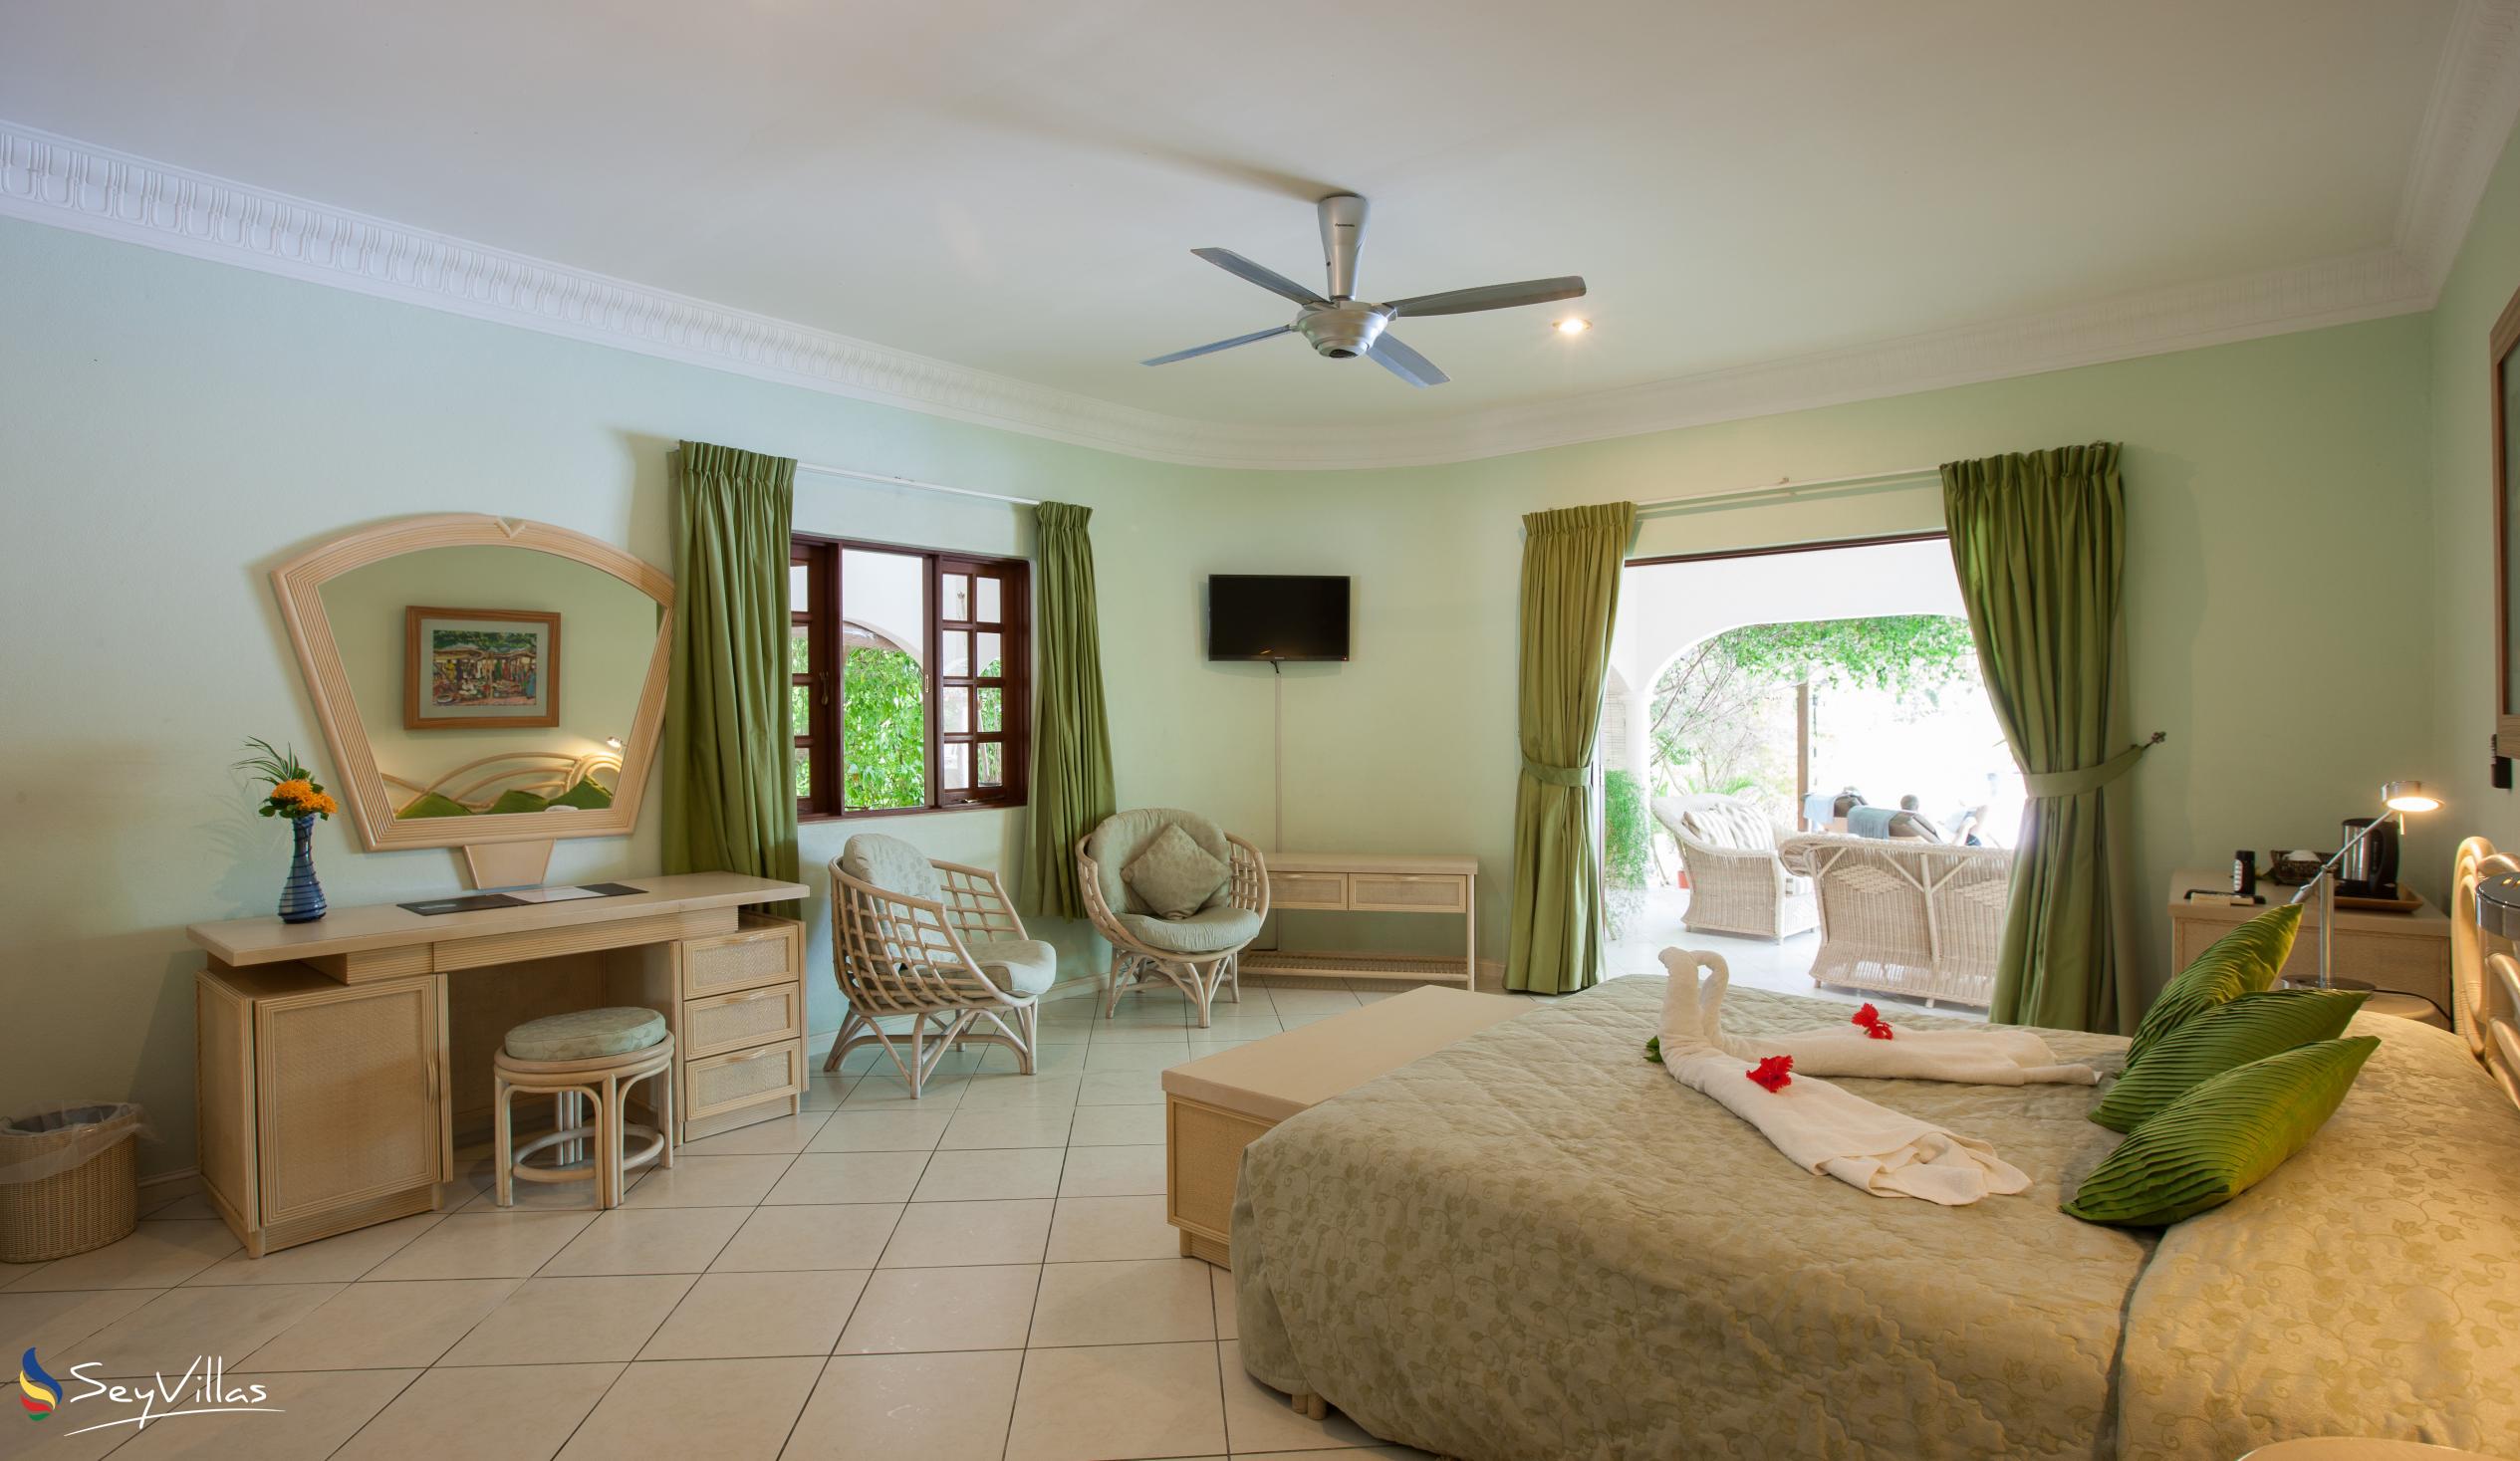 Photo 56: Villa de Cerf - Double Room - Cerf Island (Seychelles)